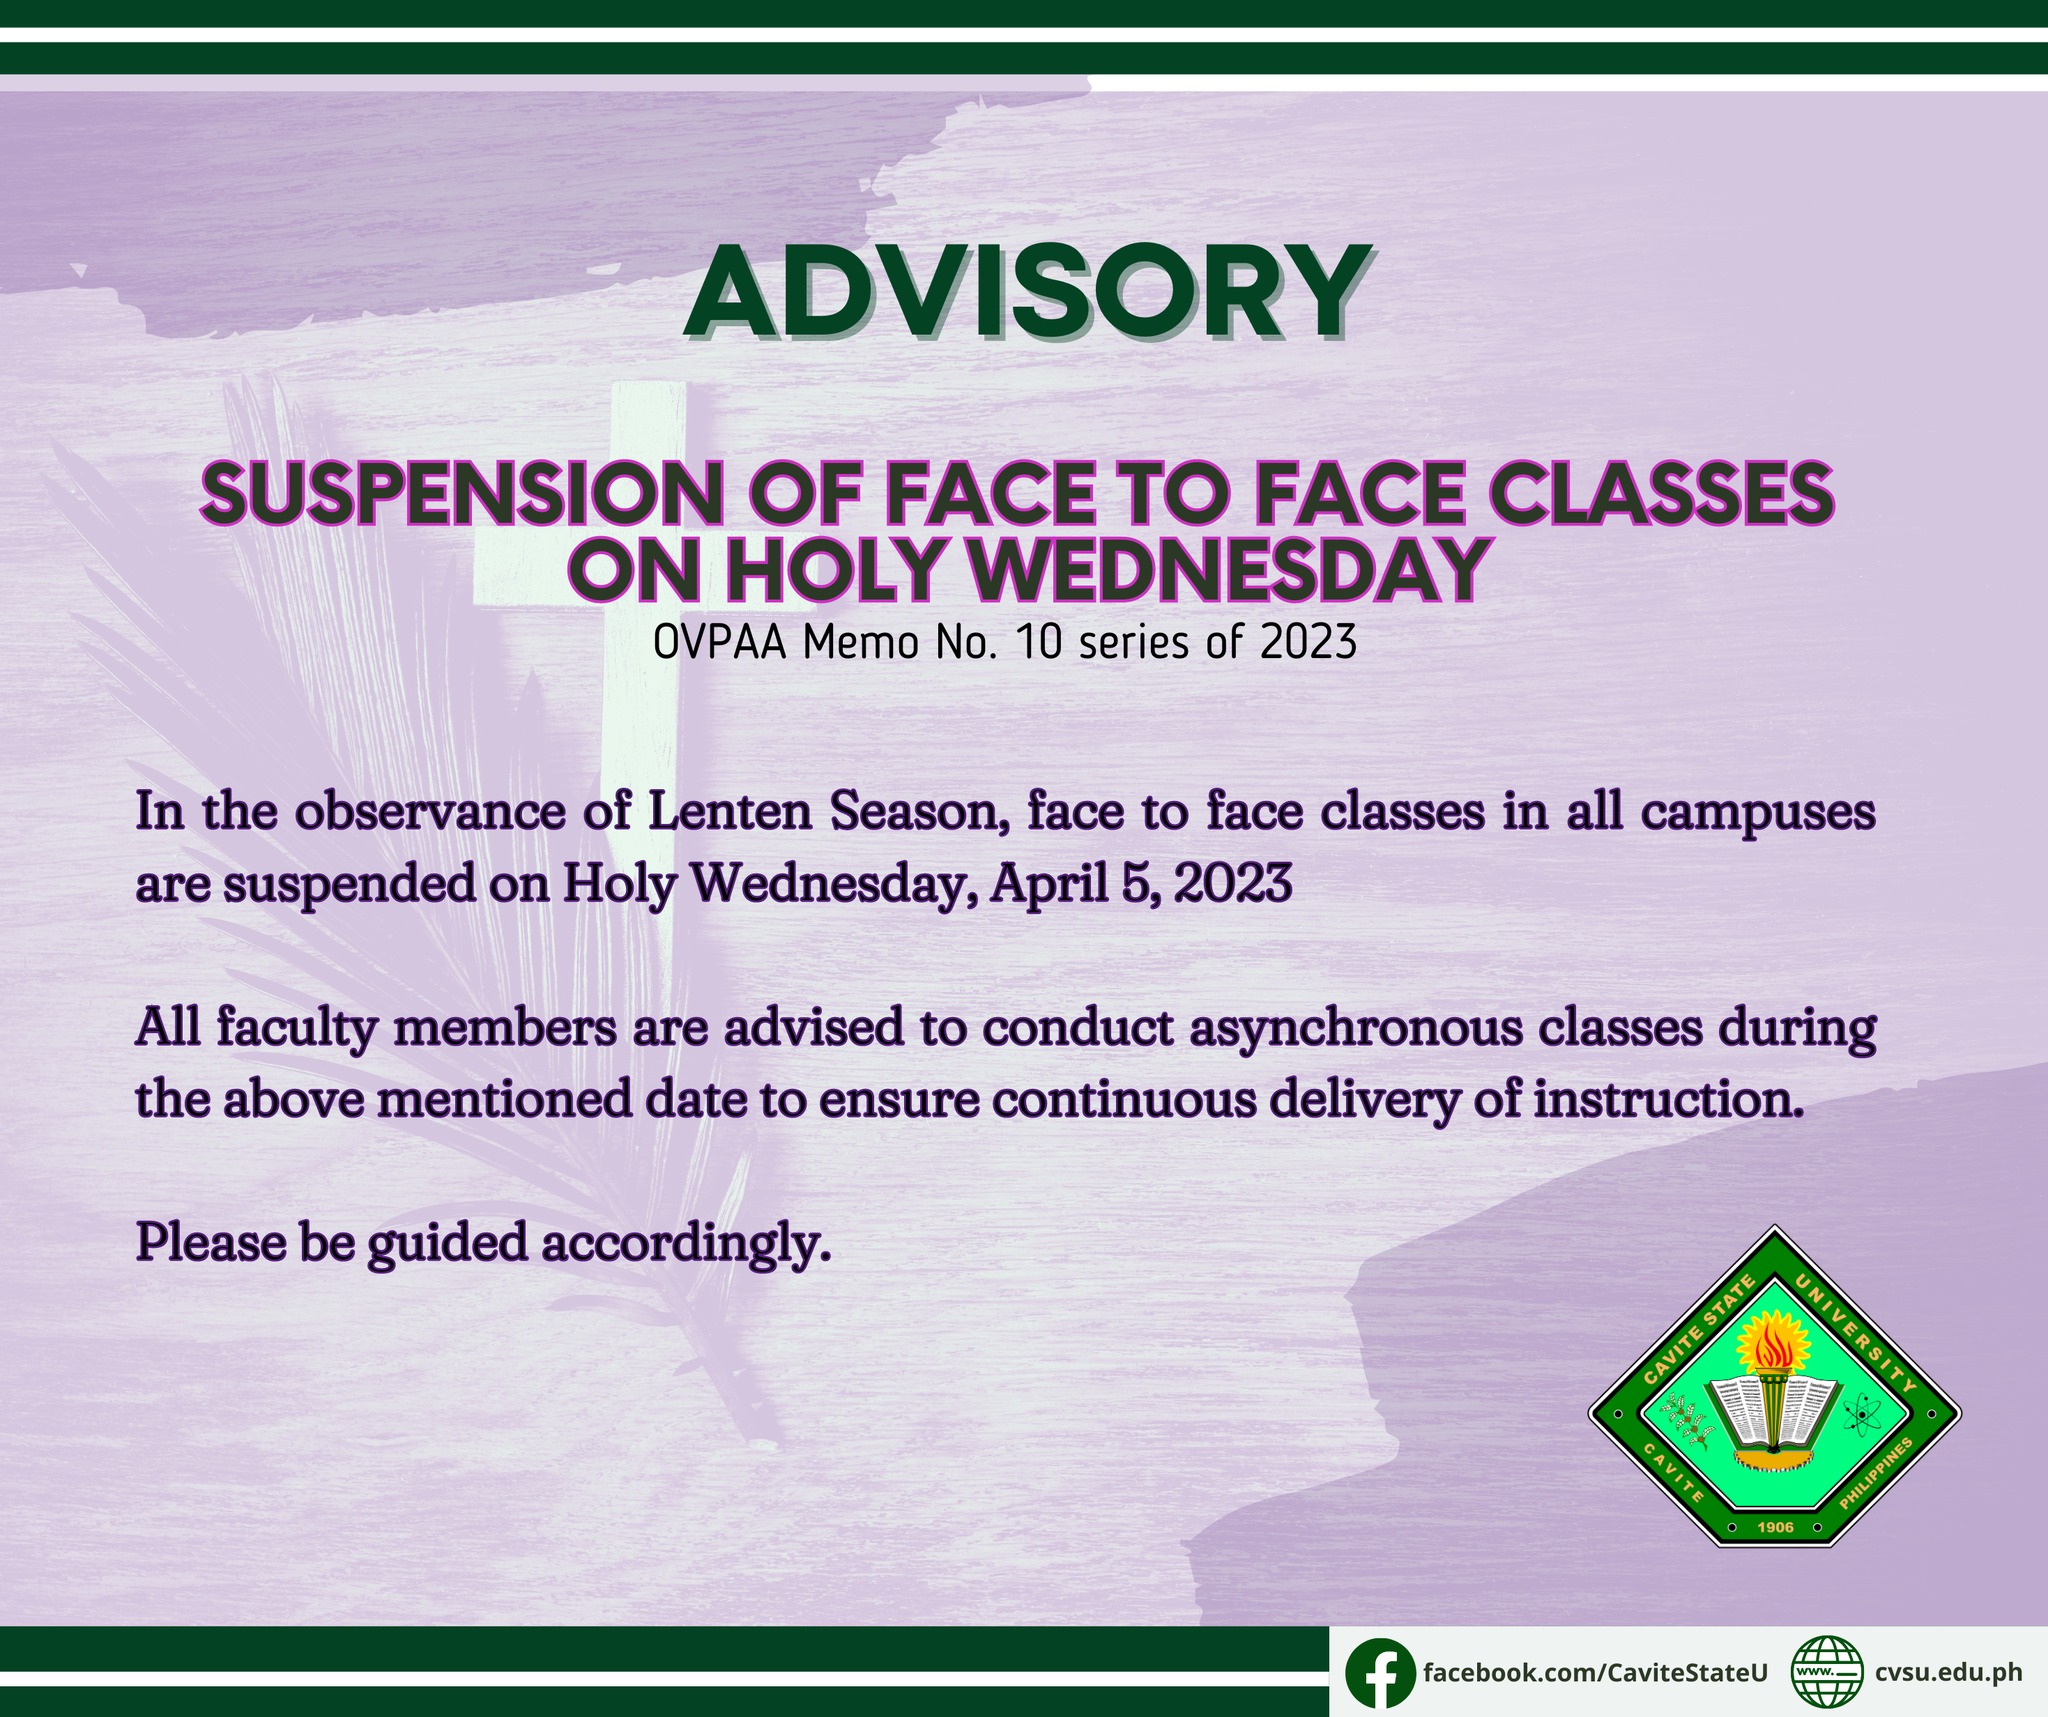 ADVISORY: Suspension of Classes in UP Cebu - University of the